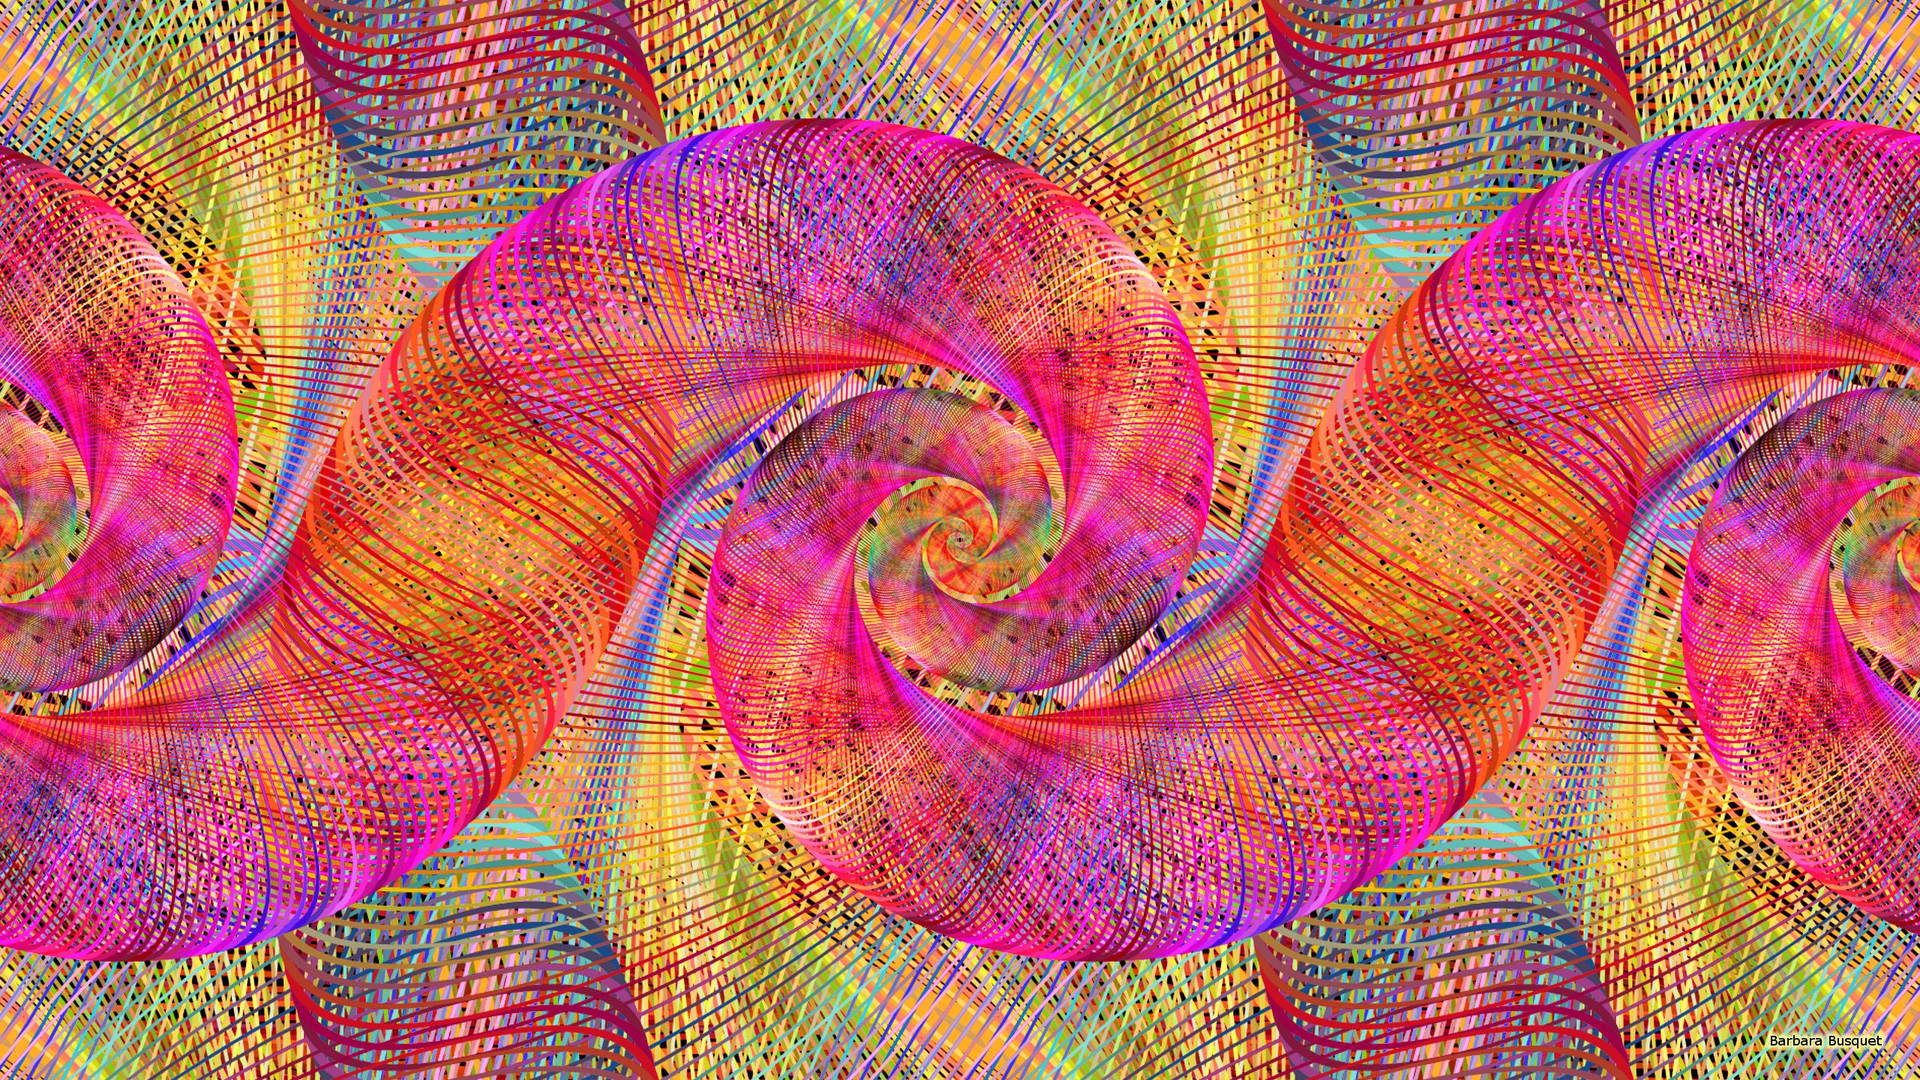 Colorful Spiral Spring Wallpaper